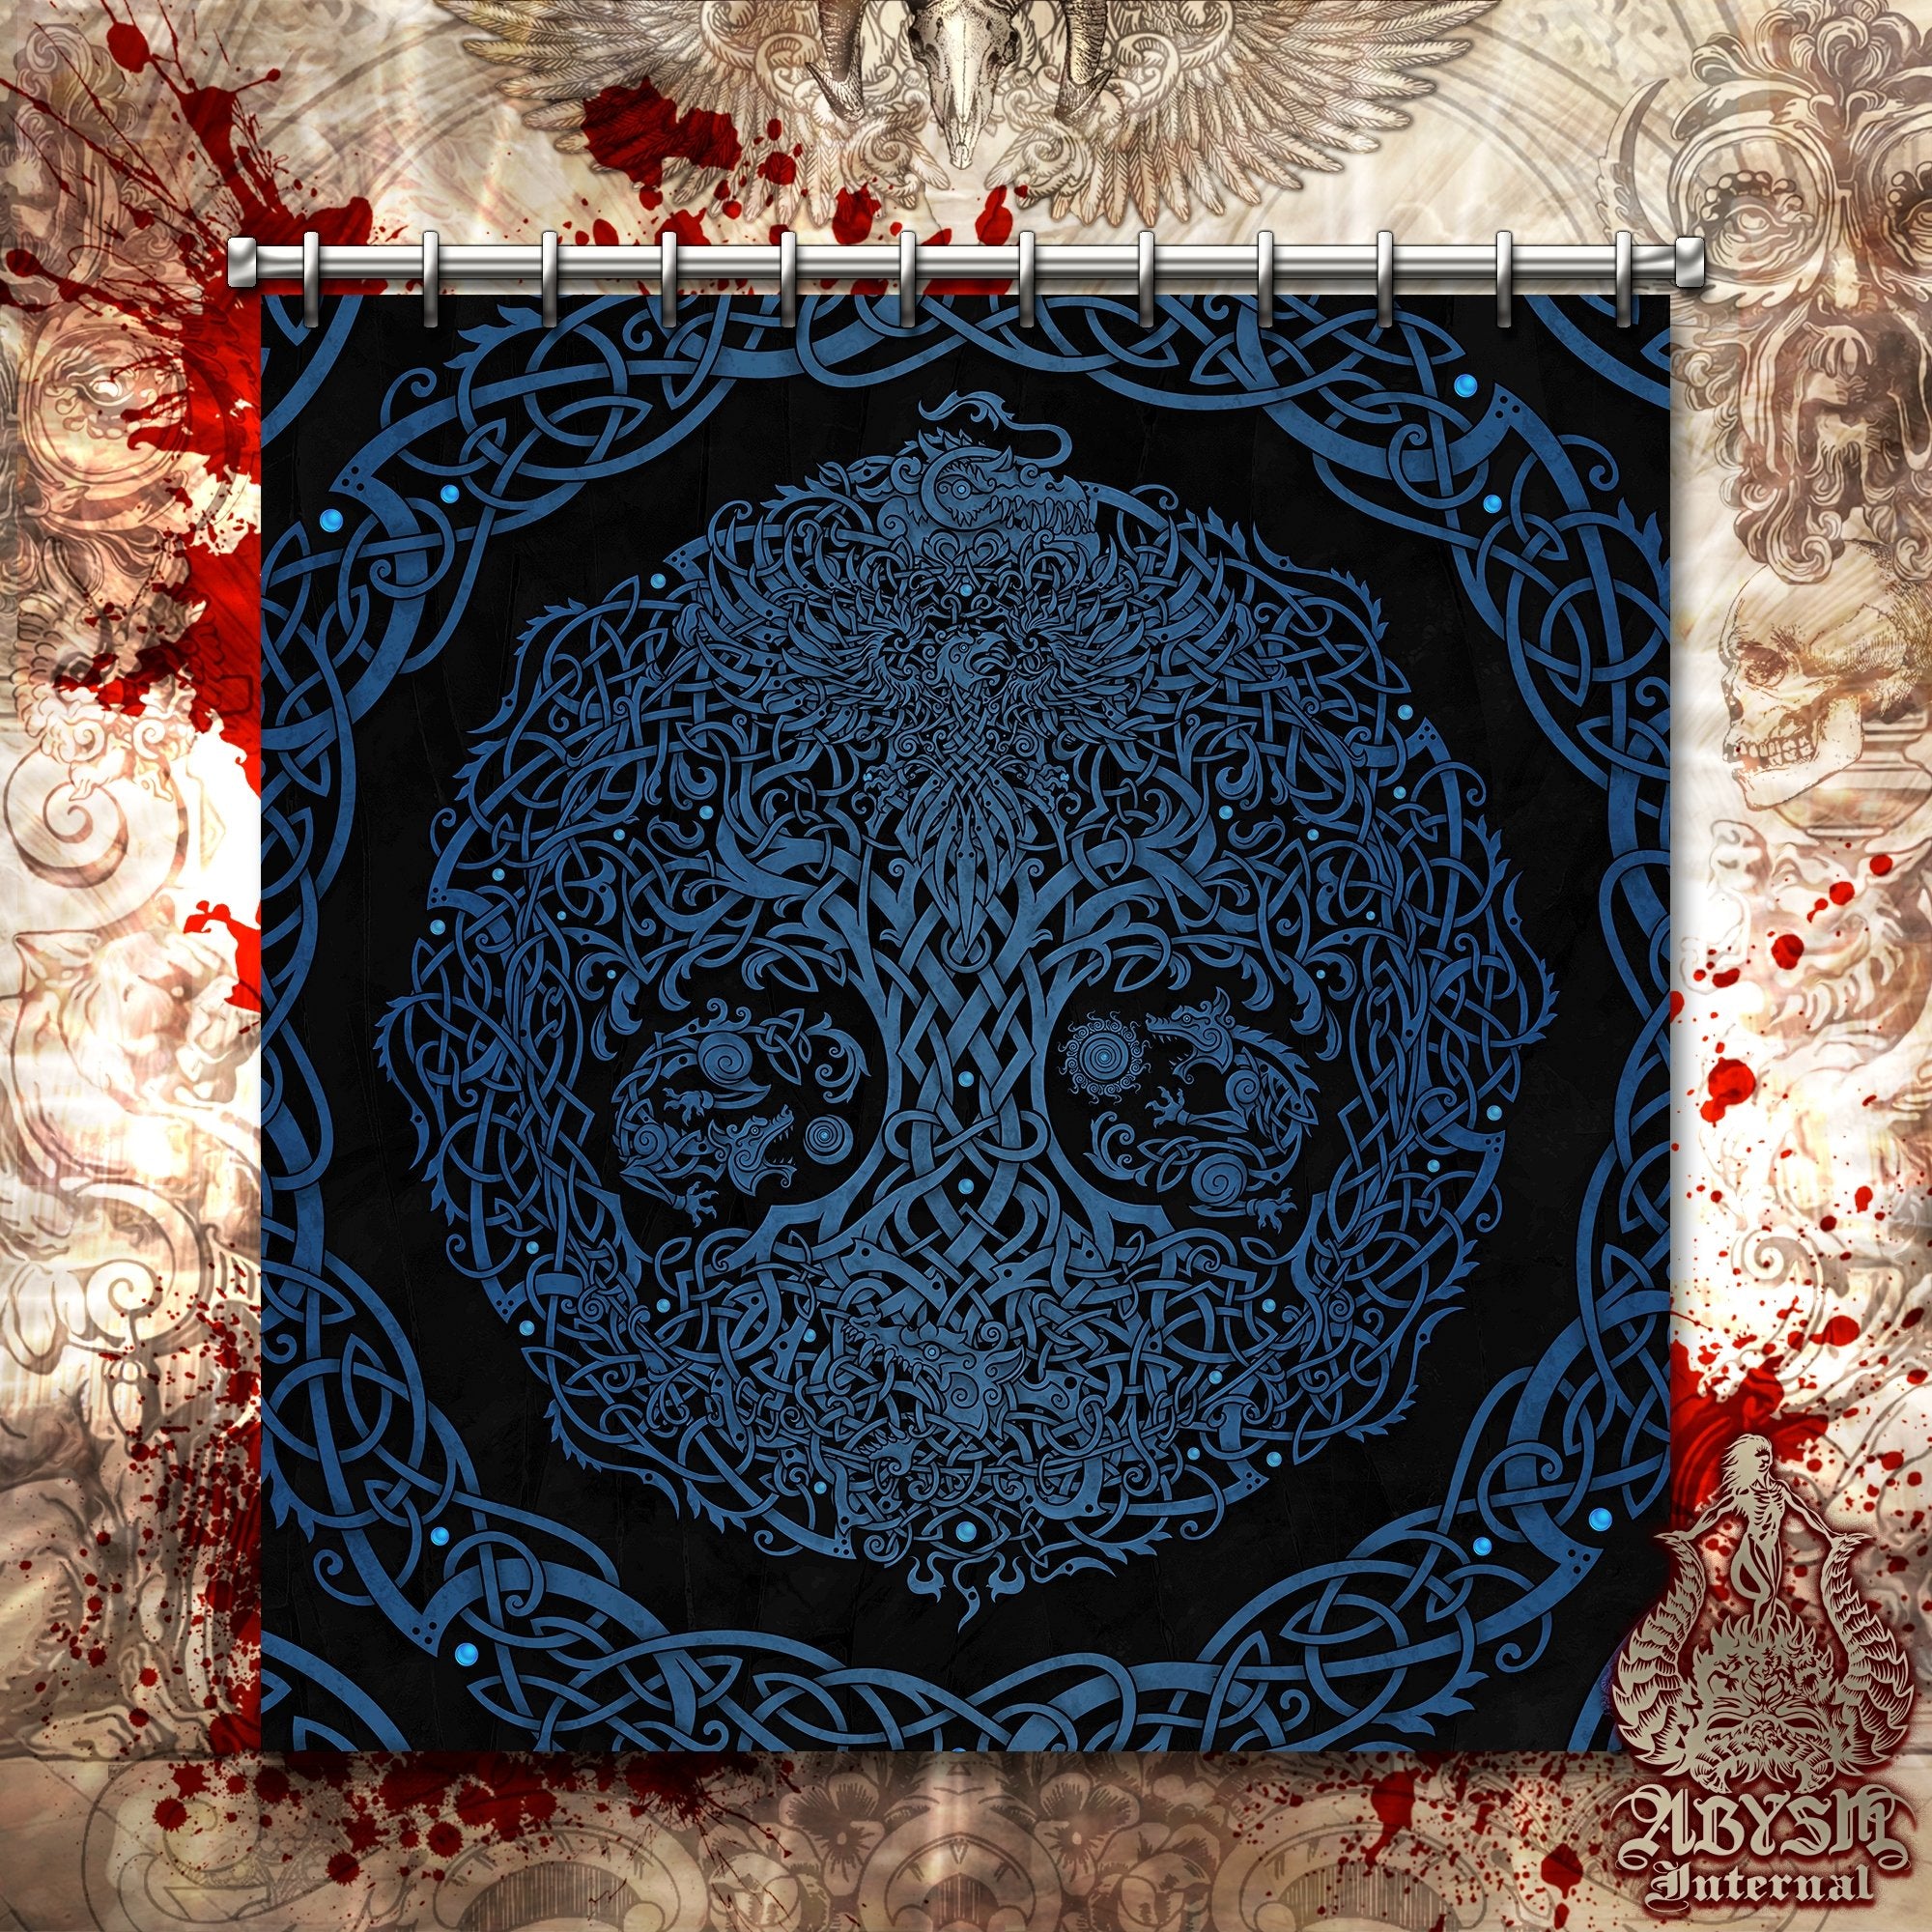 Viking Shower Curtain, Yggdrasil, Norse, Gothic Bathroom Decor, Tree of Life - Black & Blue - Abysm Internal